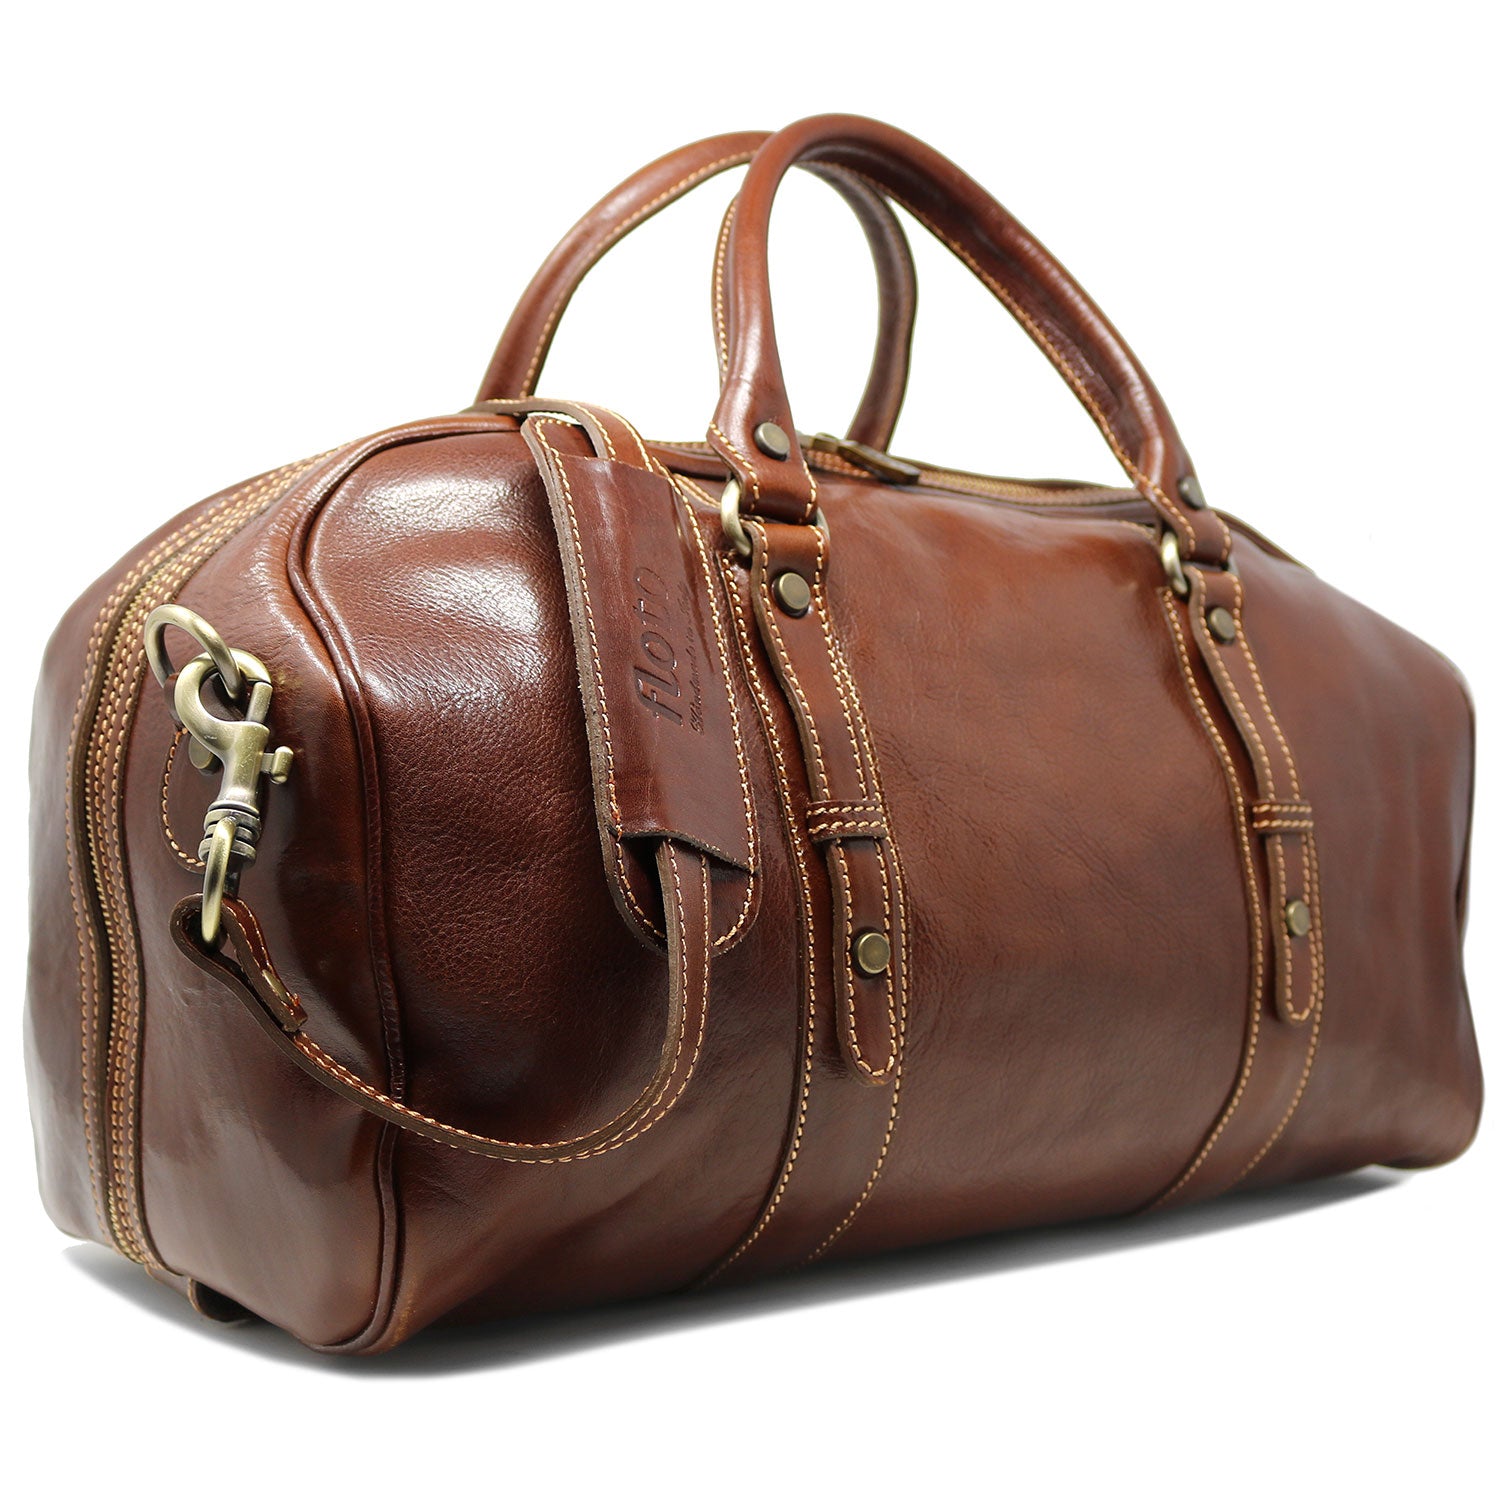 Floto Venezia Piccola Italian Leather Duffle Bag Carryon Weekender